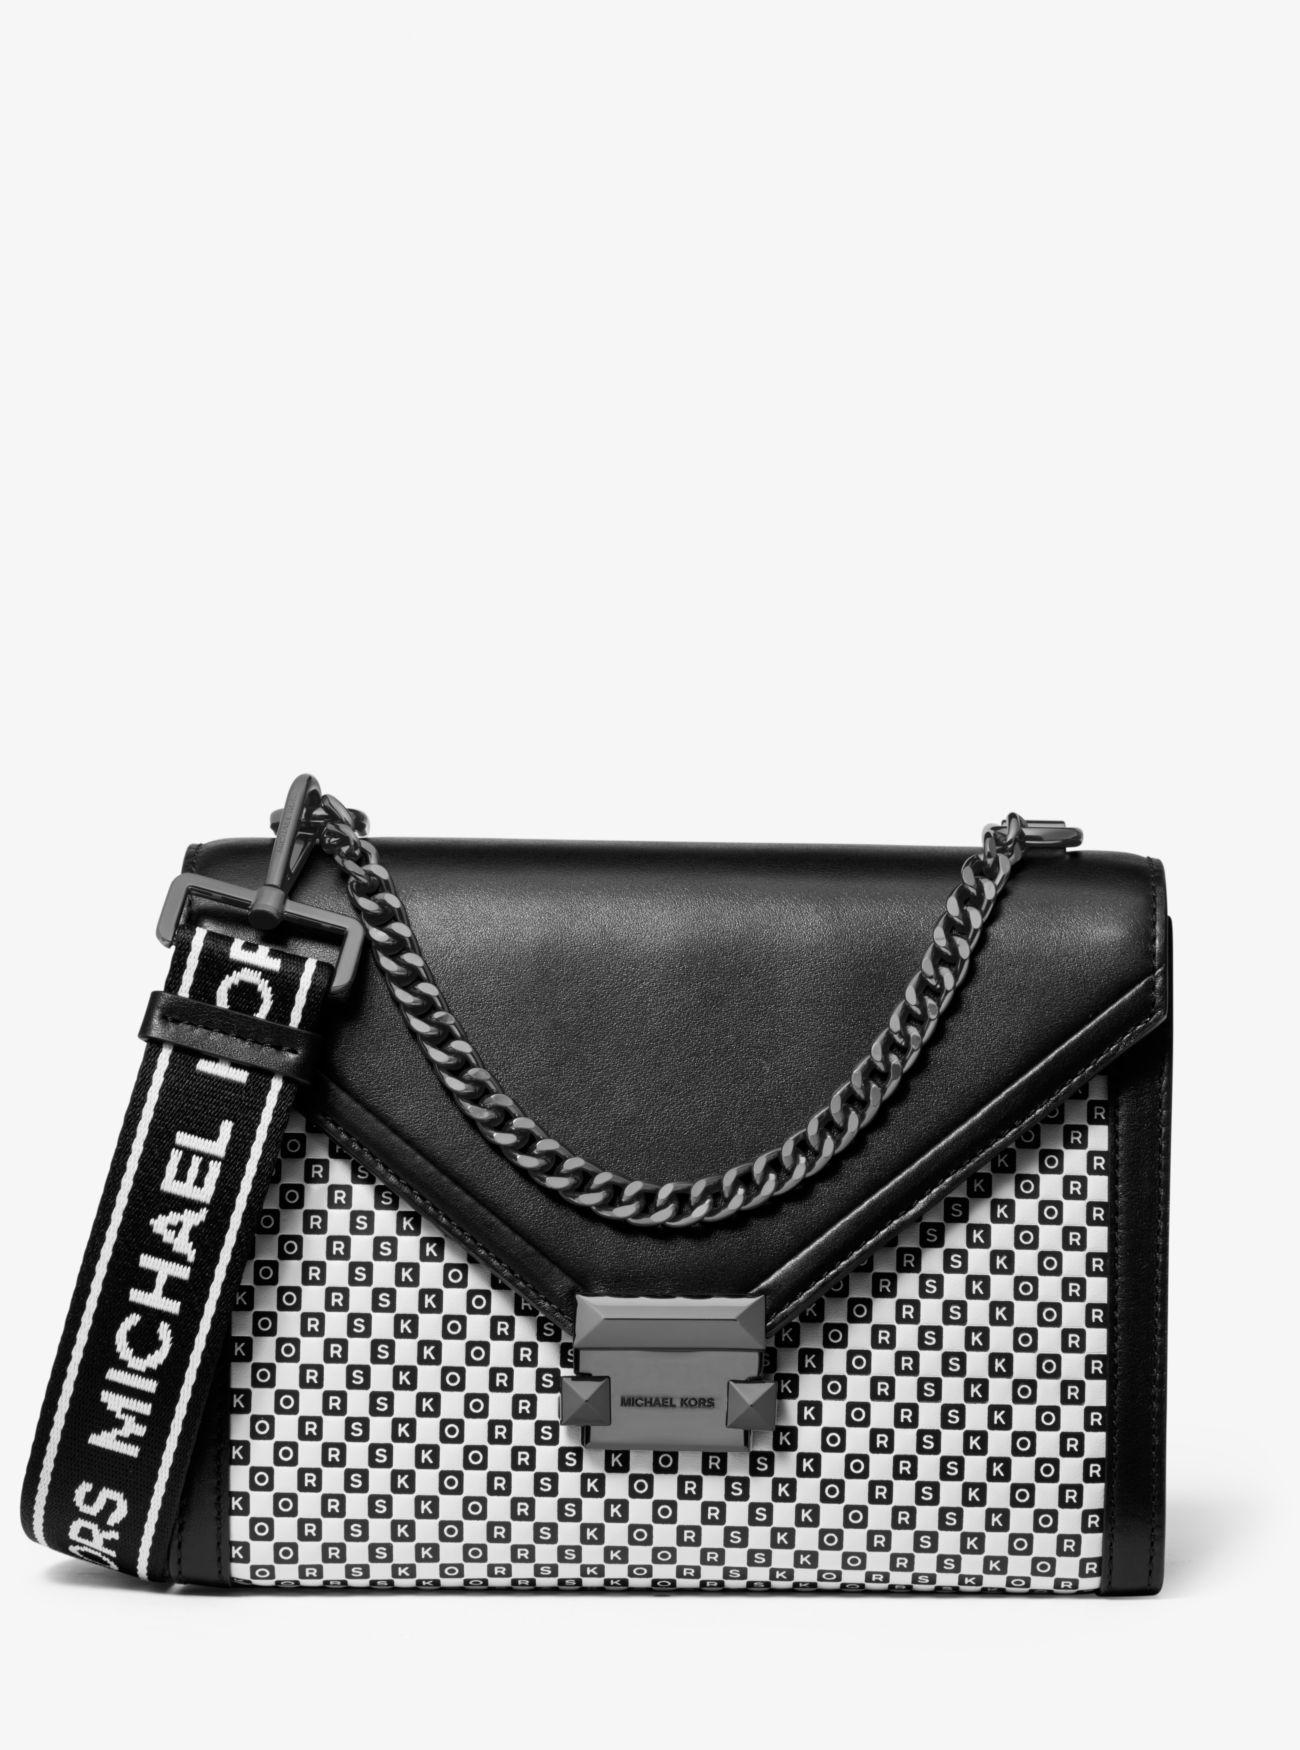 michael kors checkerboard purse